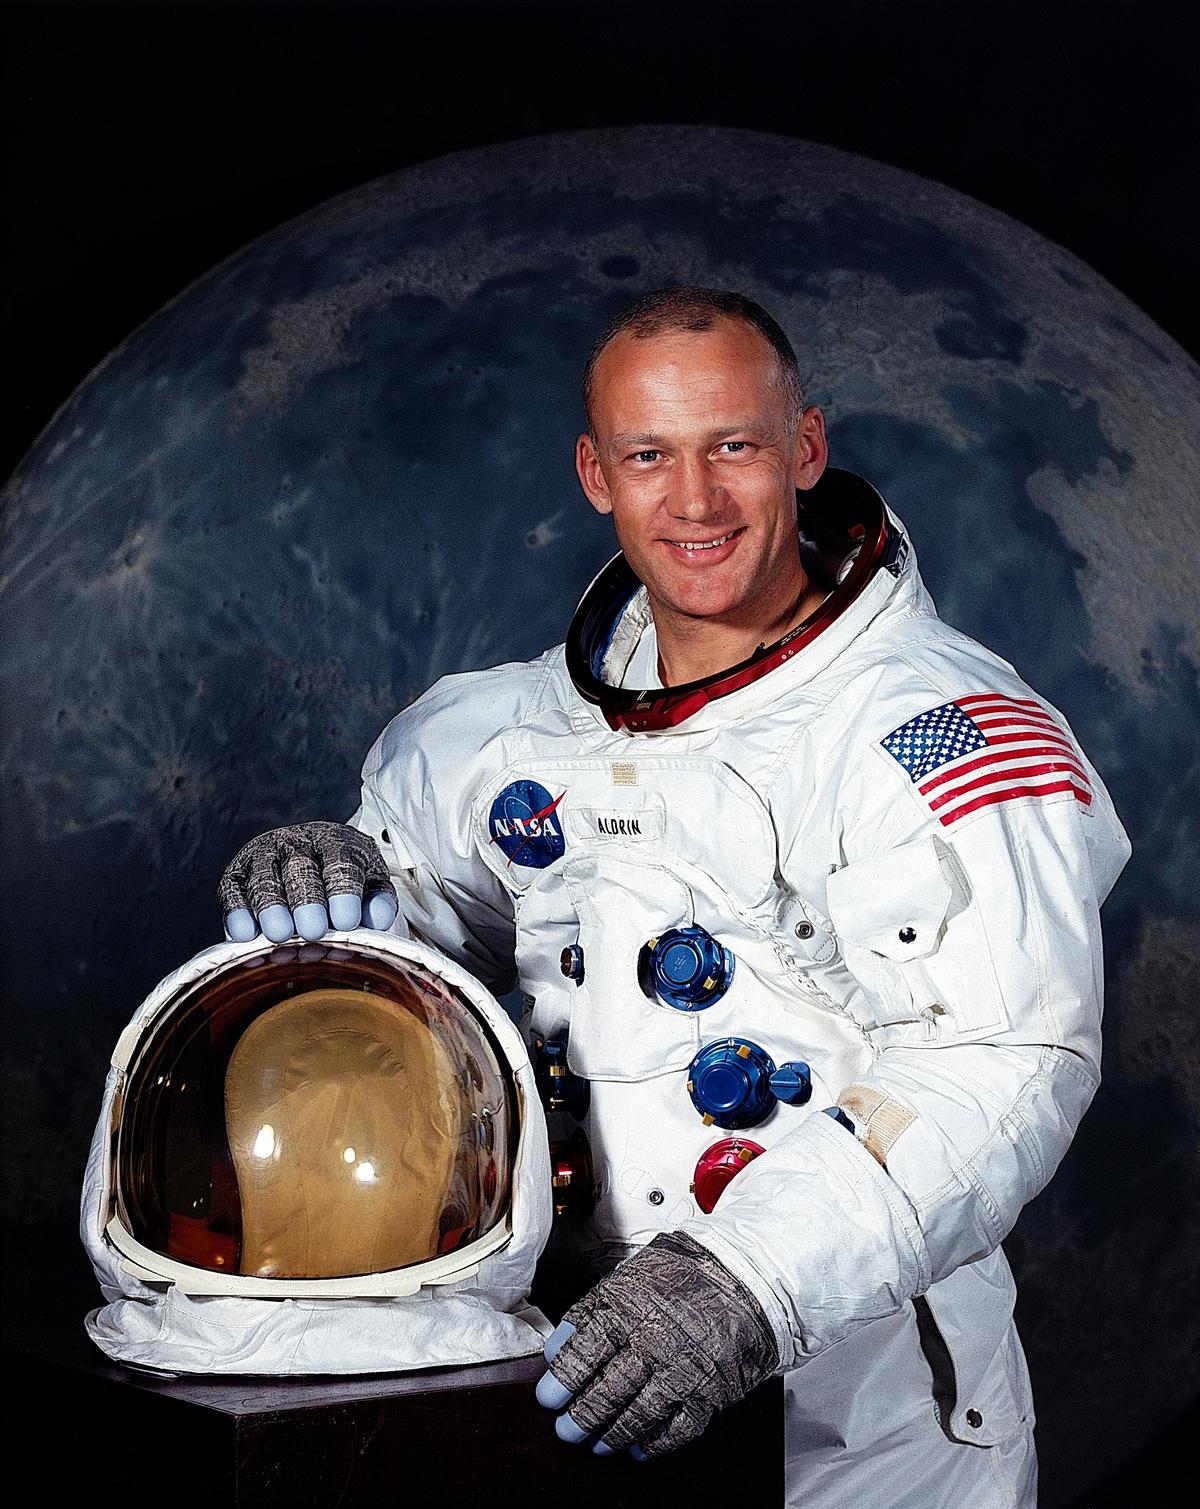 U.S. astronaut Edwin E. "Buzz" Aldrin, Jr., Lunar Module pilot on Apollo 11, poses for a portrait taken in July 1969. (NASA via Getty Images)